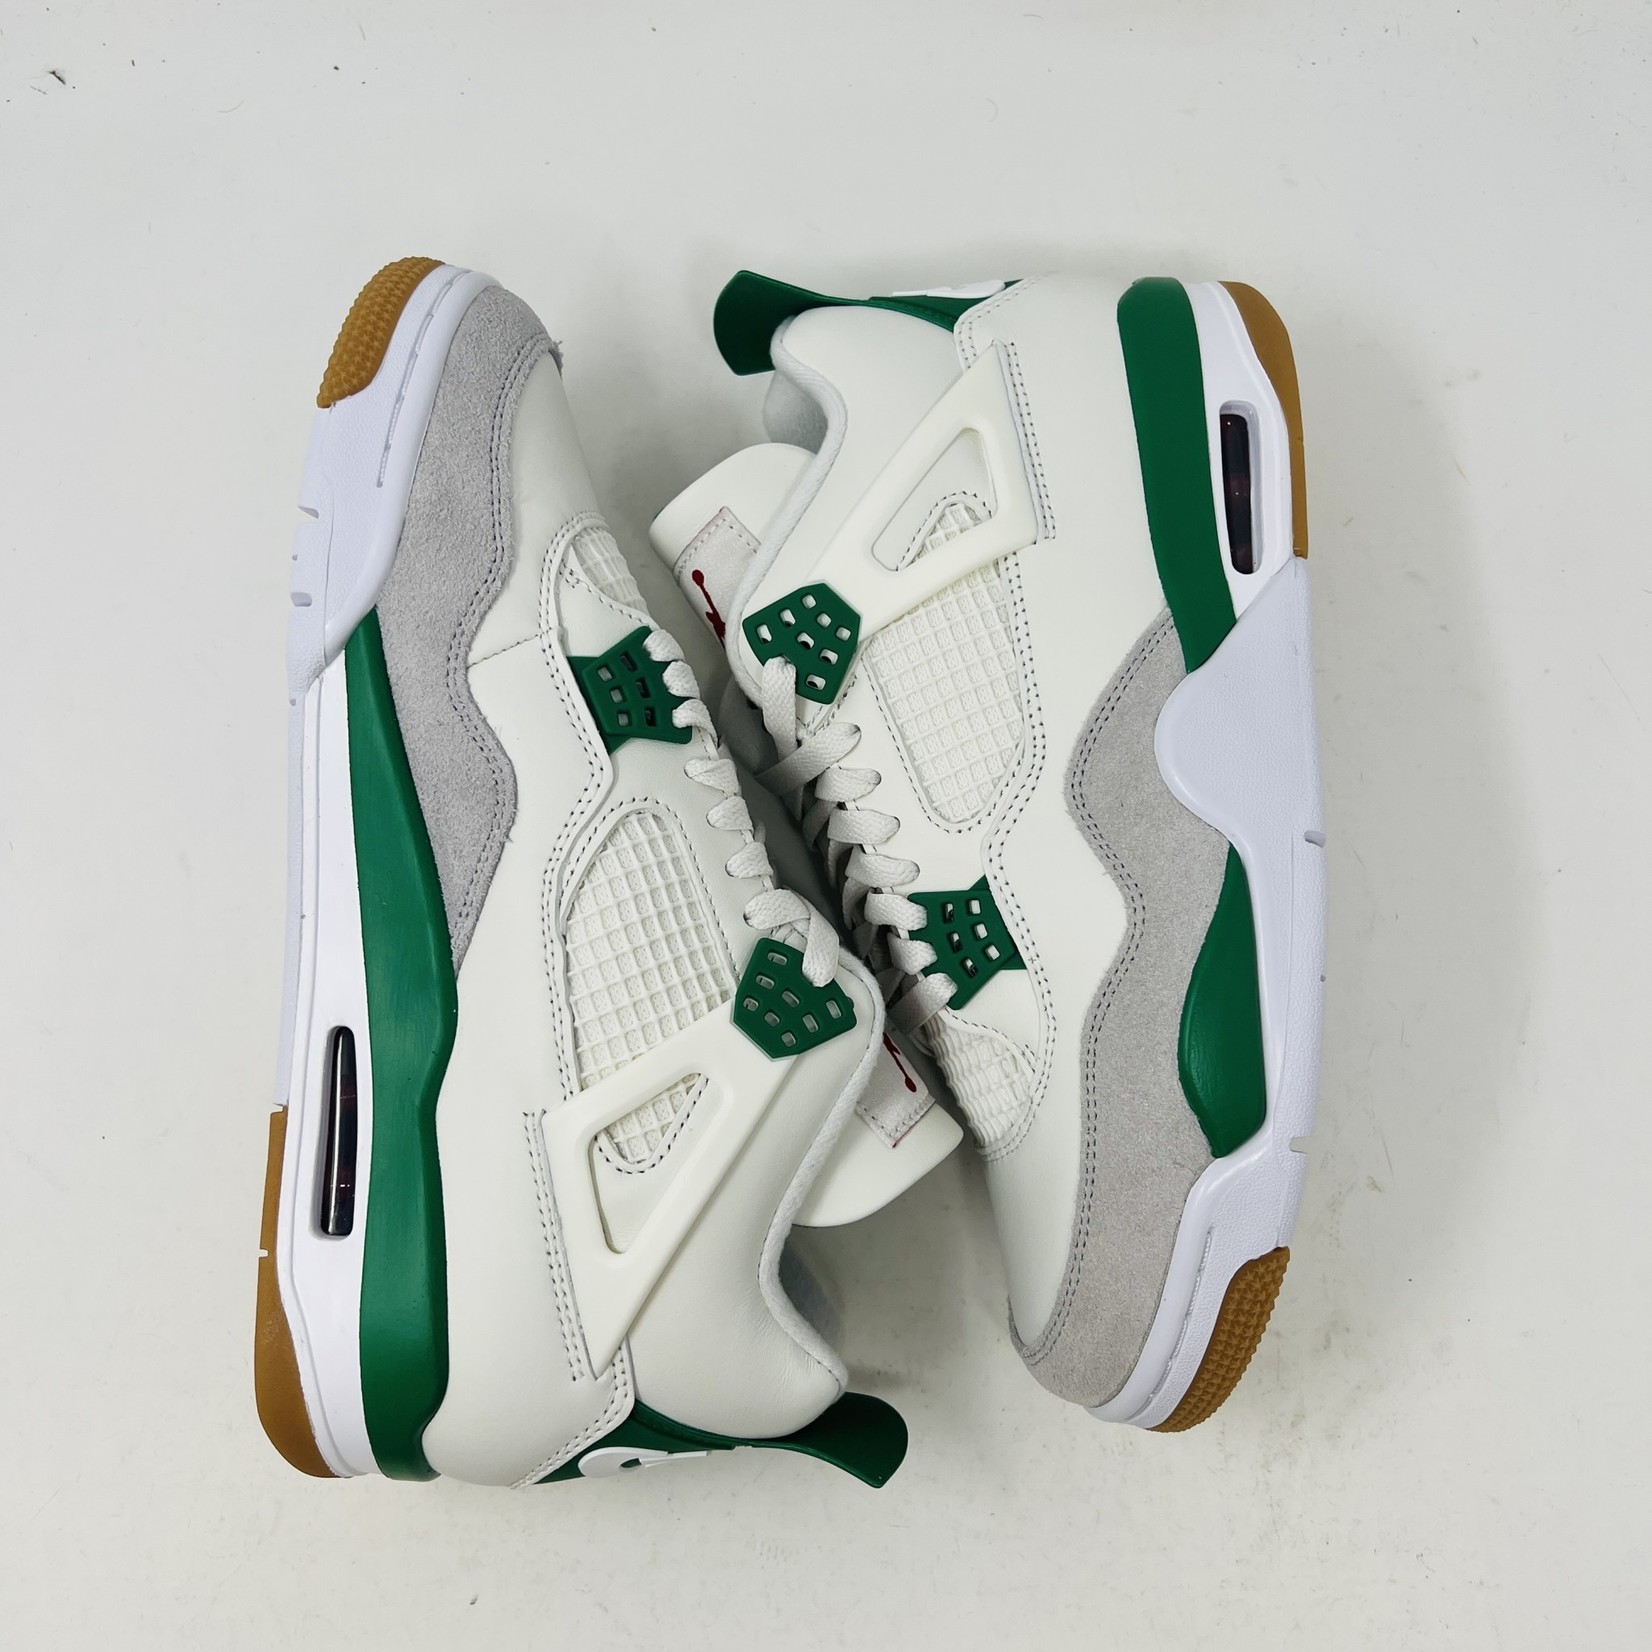 Air Jordan 4 Retro Pine Green Shoes